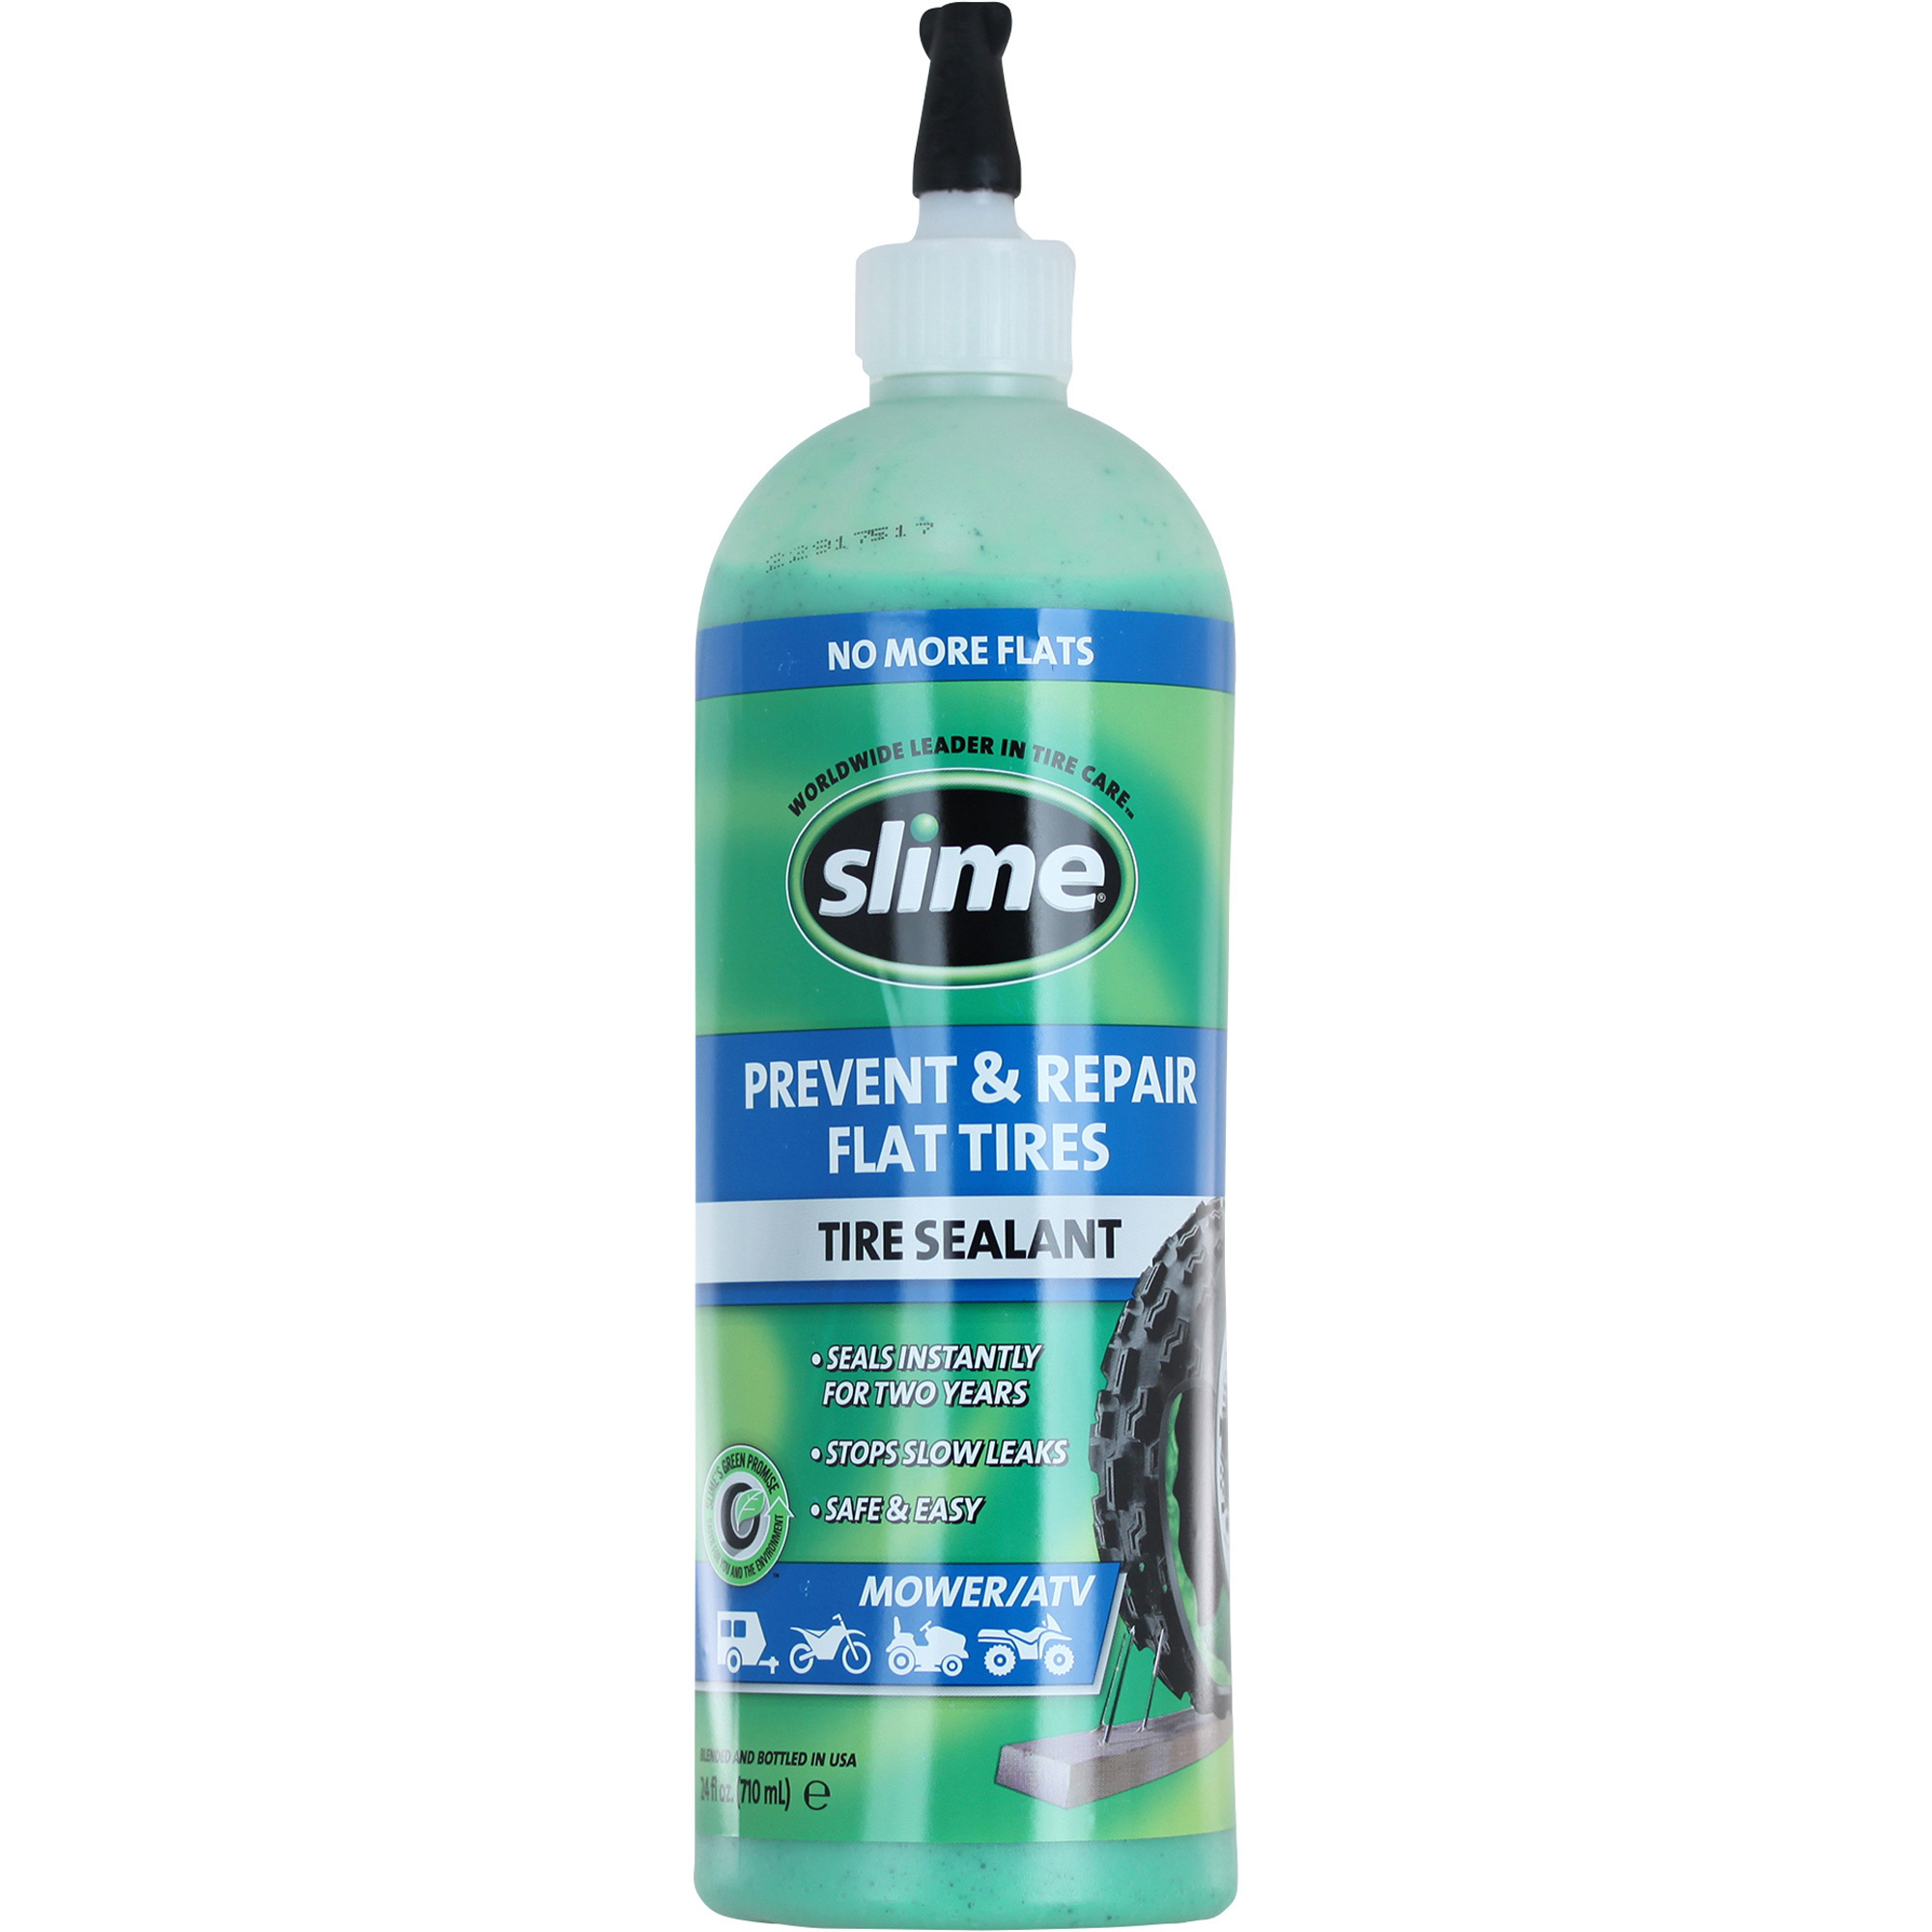 Slime Prevent and Repair Tire Sealant, 24 oz. (Mower/ATV)